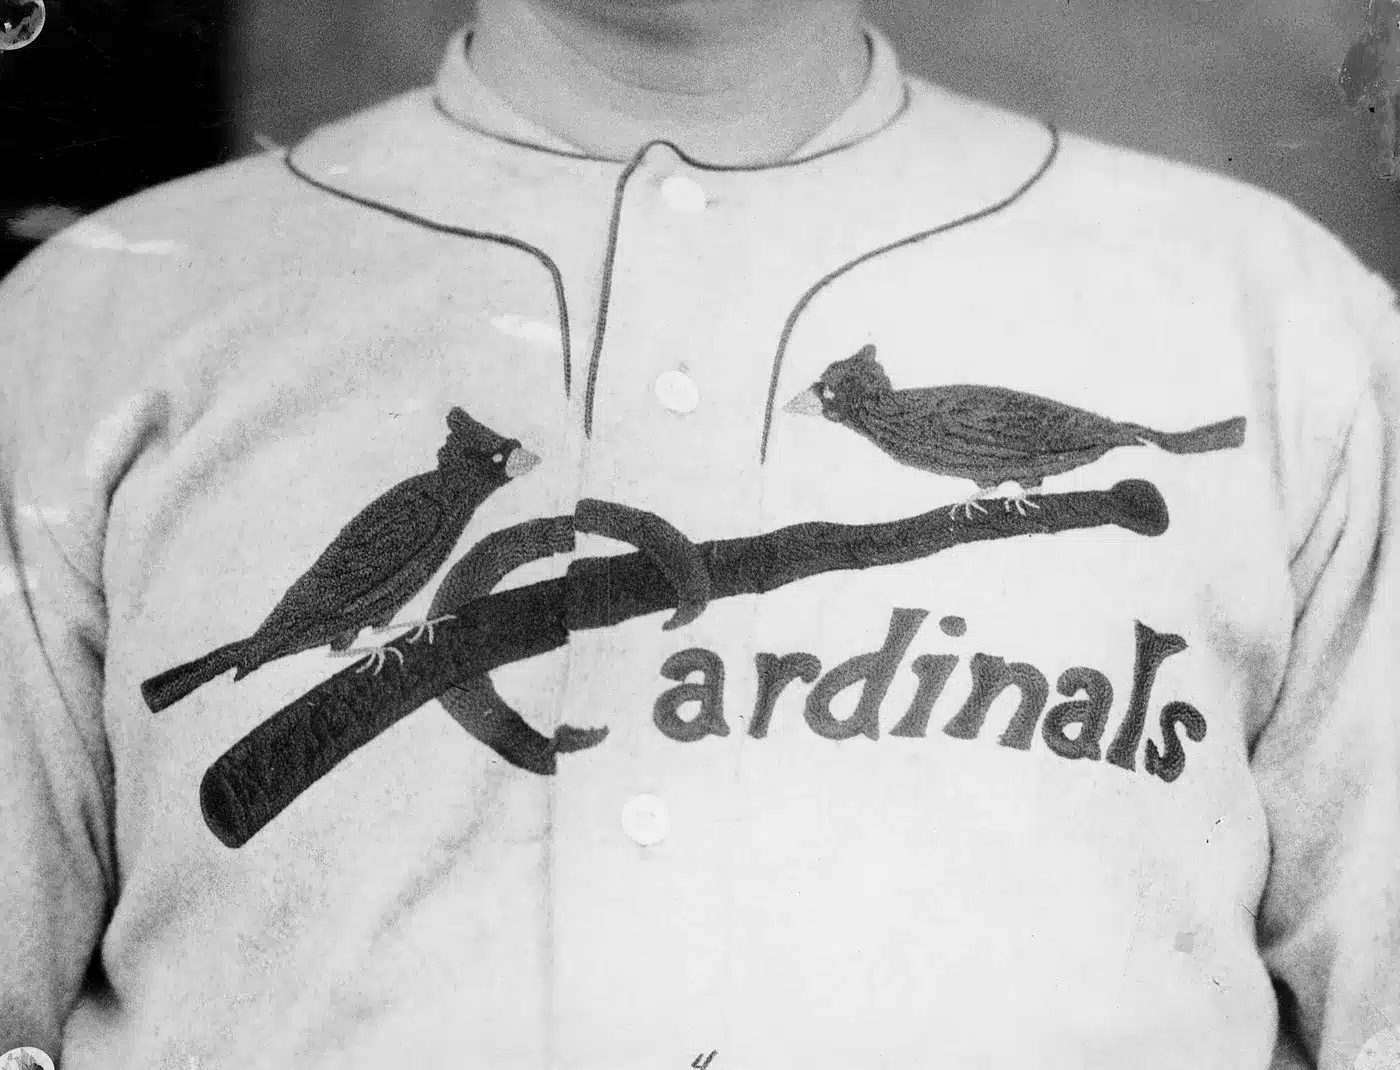 Cardinals vintage jersey